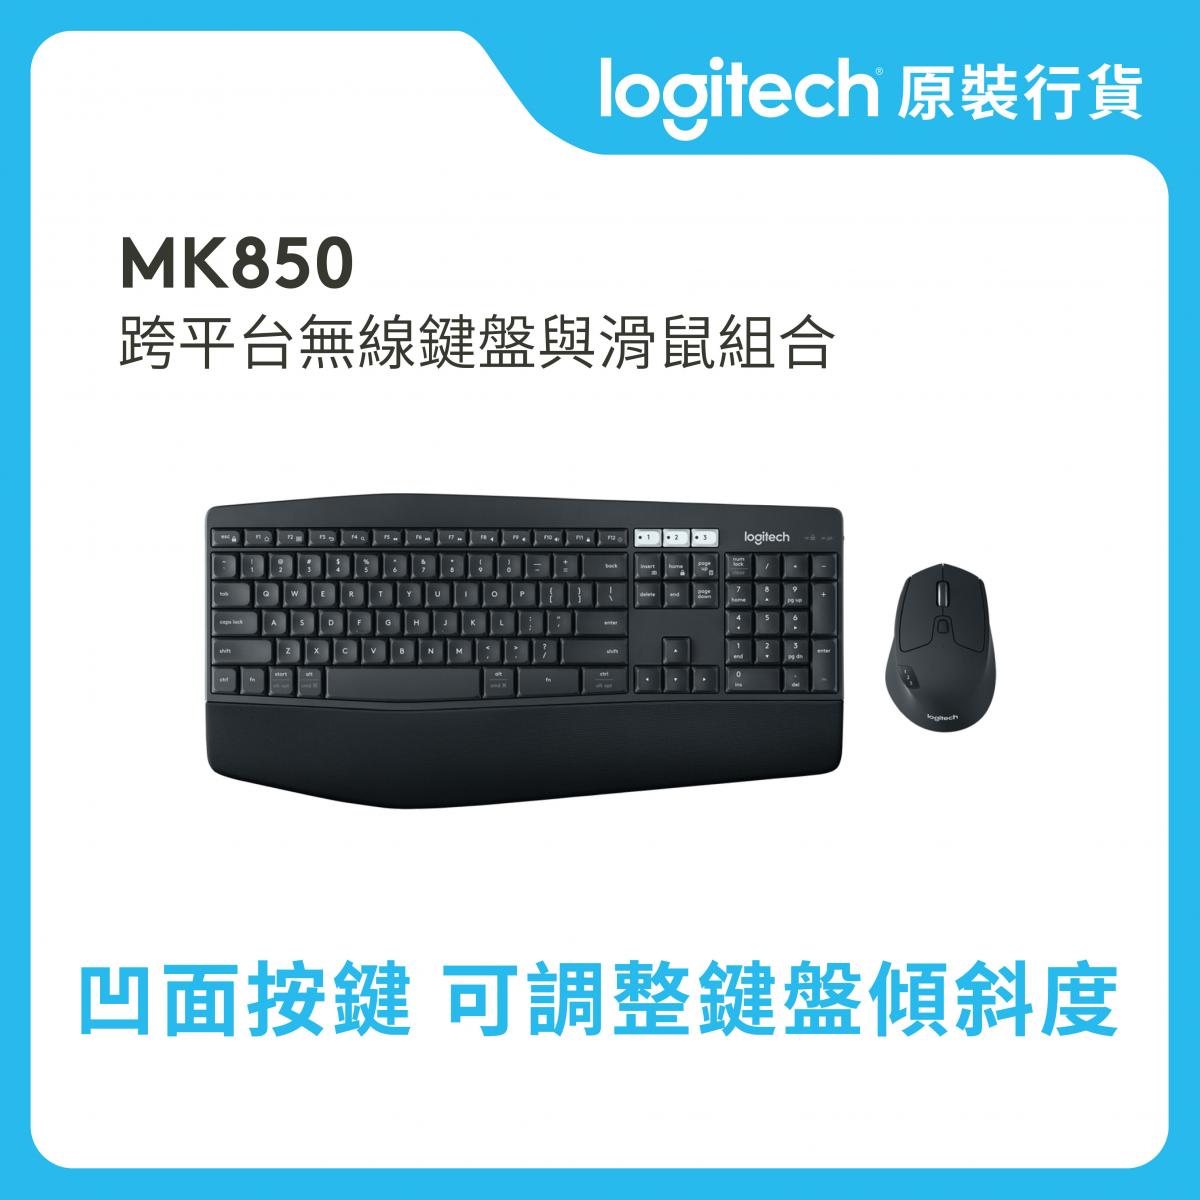 MK850 - Chinese - PERFORMANCE Multi-Device Wireless Keyboard & Mouse Combo (920-008489)